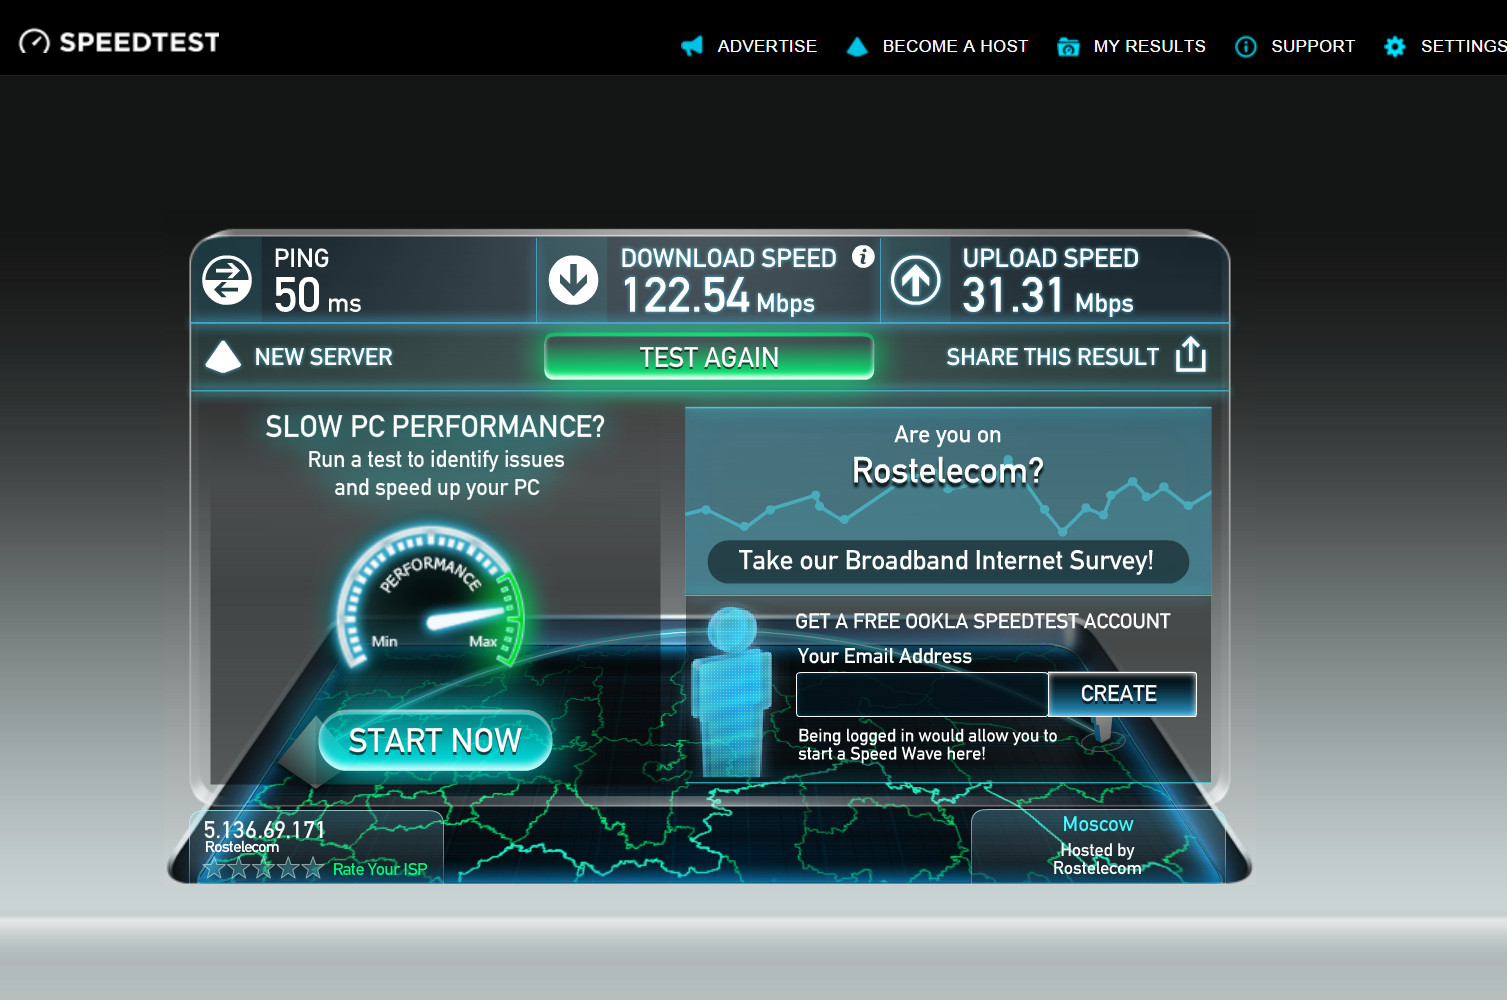 Testing internet speed. Скорость интернета. Тест скорости интернета. Спидтест. Спидтест скорости интернета.